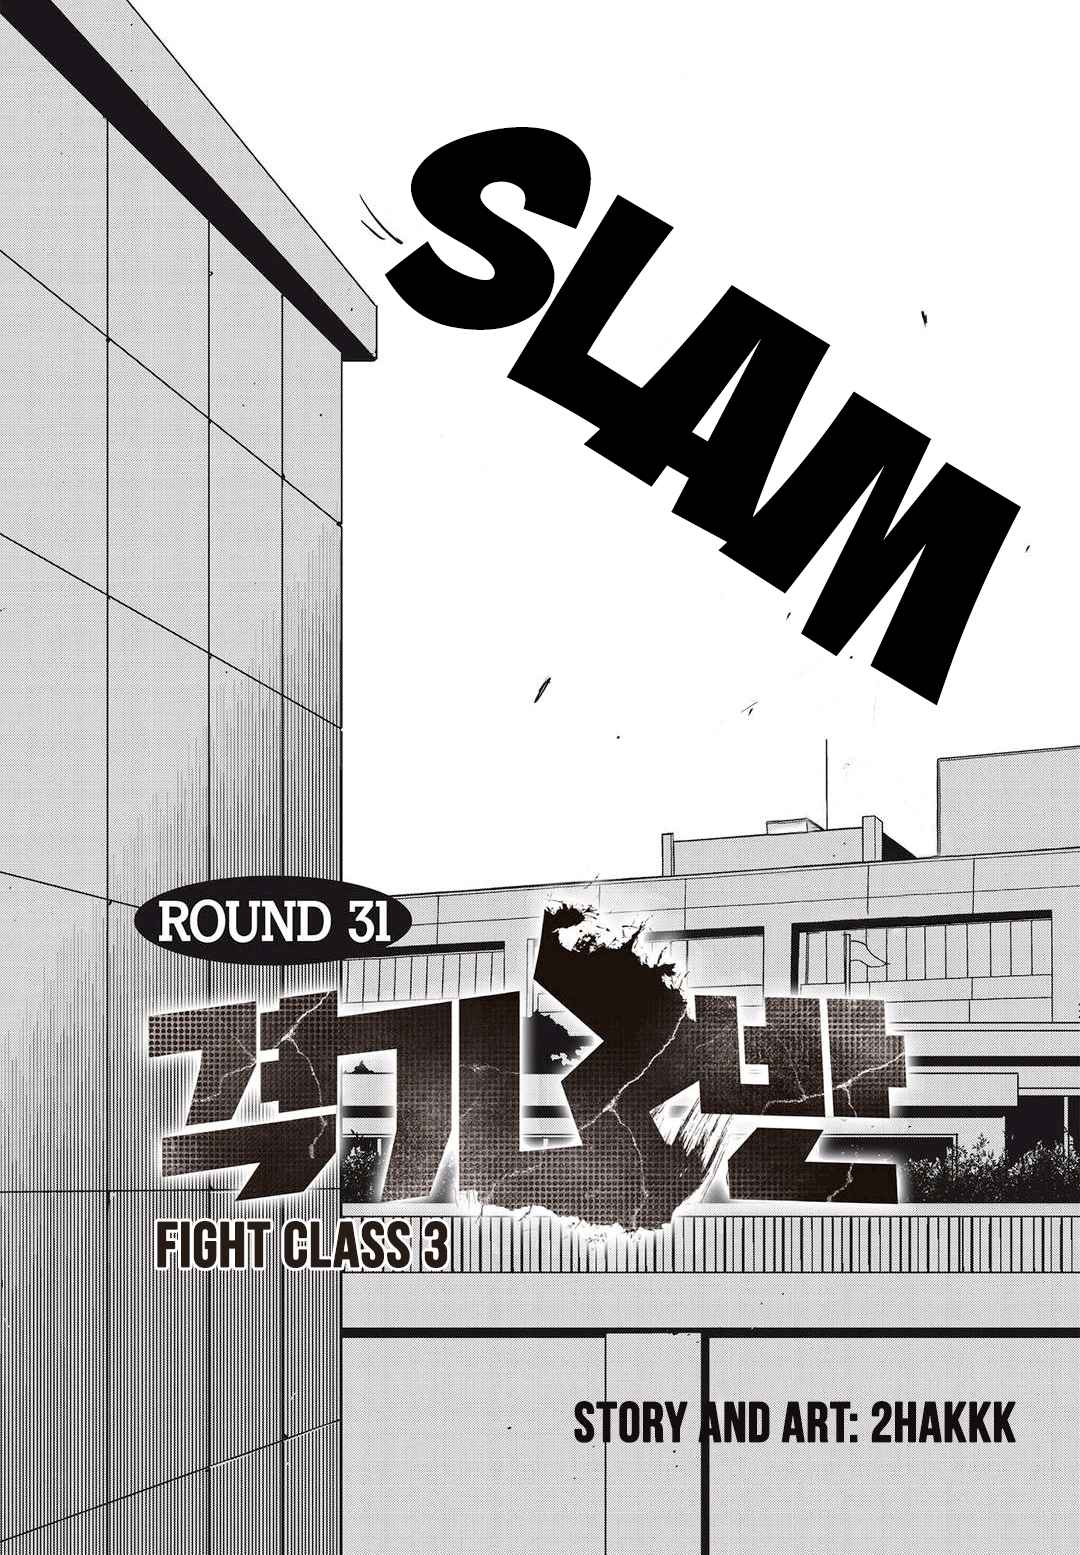 Fight Class 3 Vol. 5 Ch. 31 Round 31